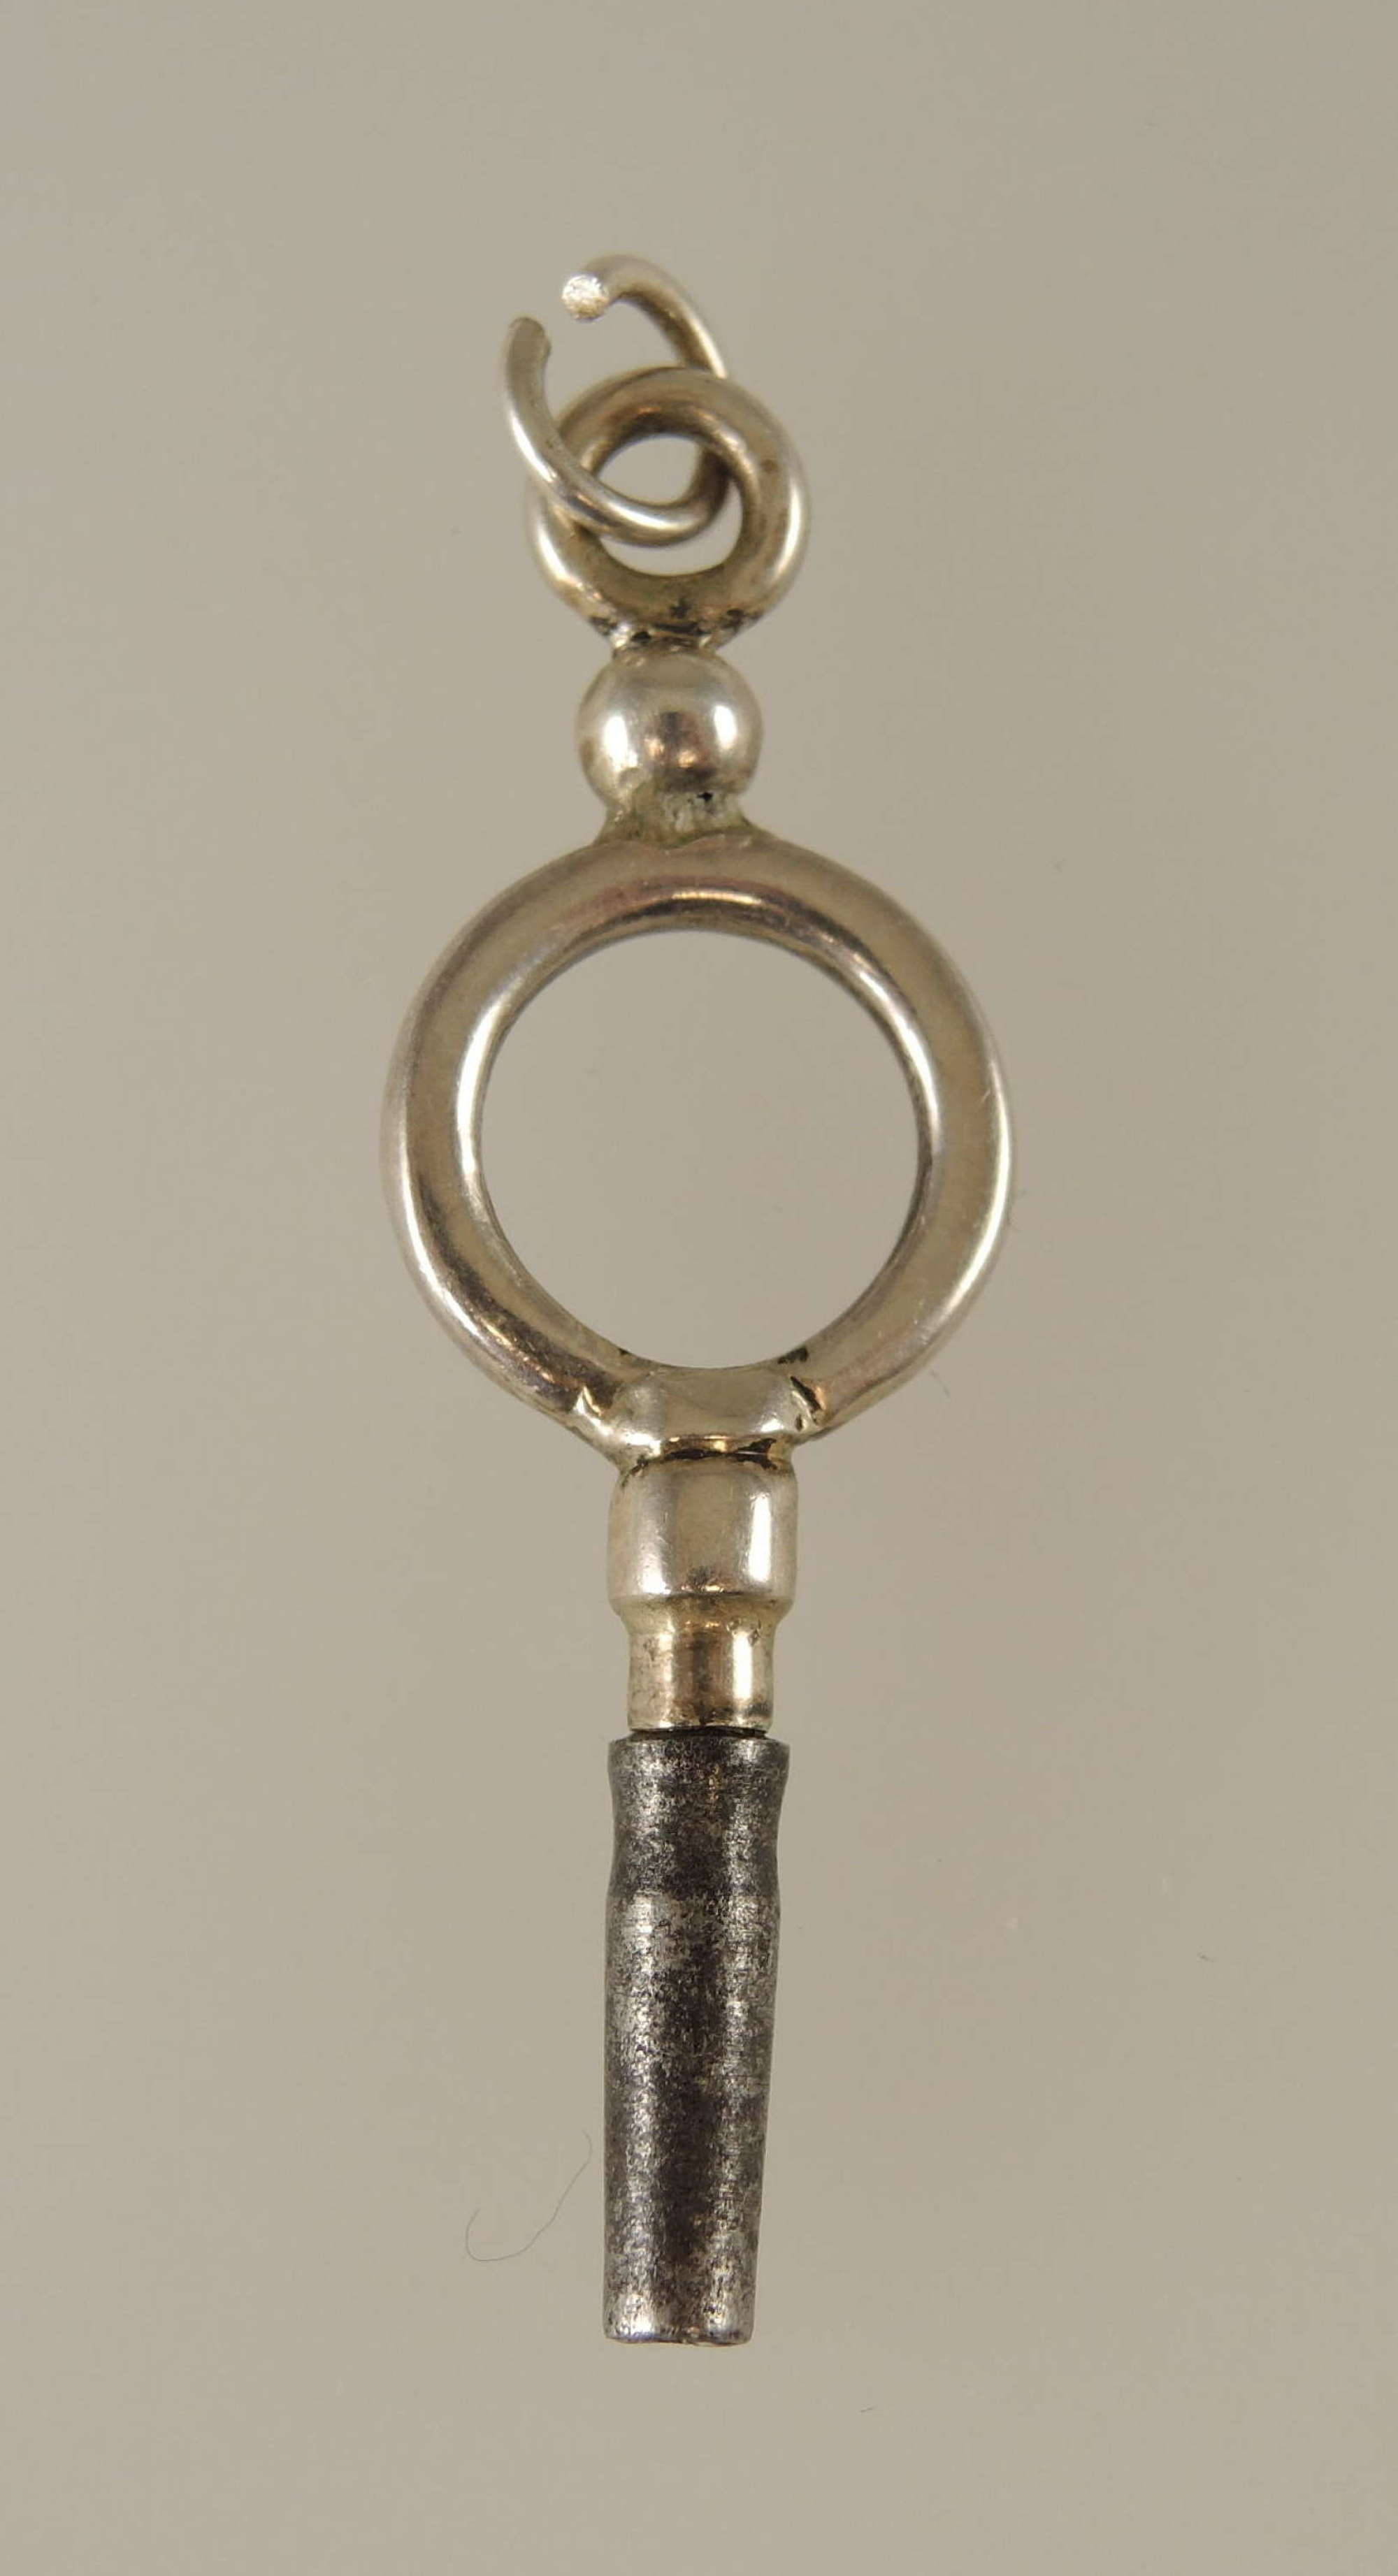 Antique silver pocket watch key c1890